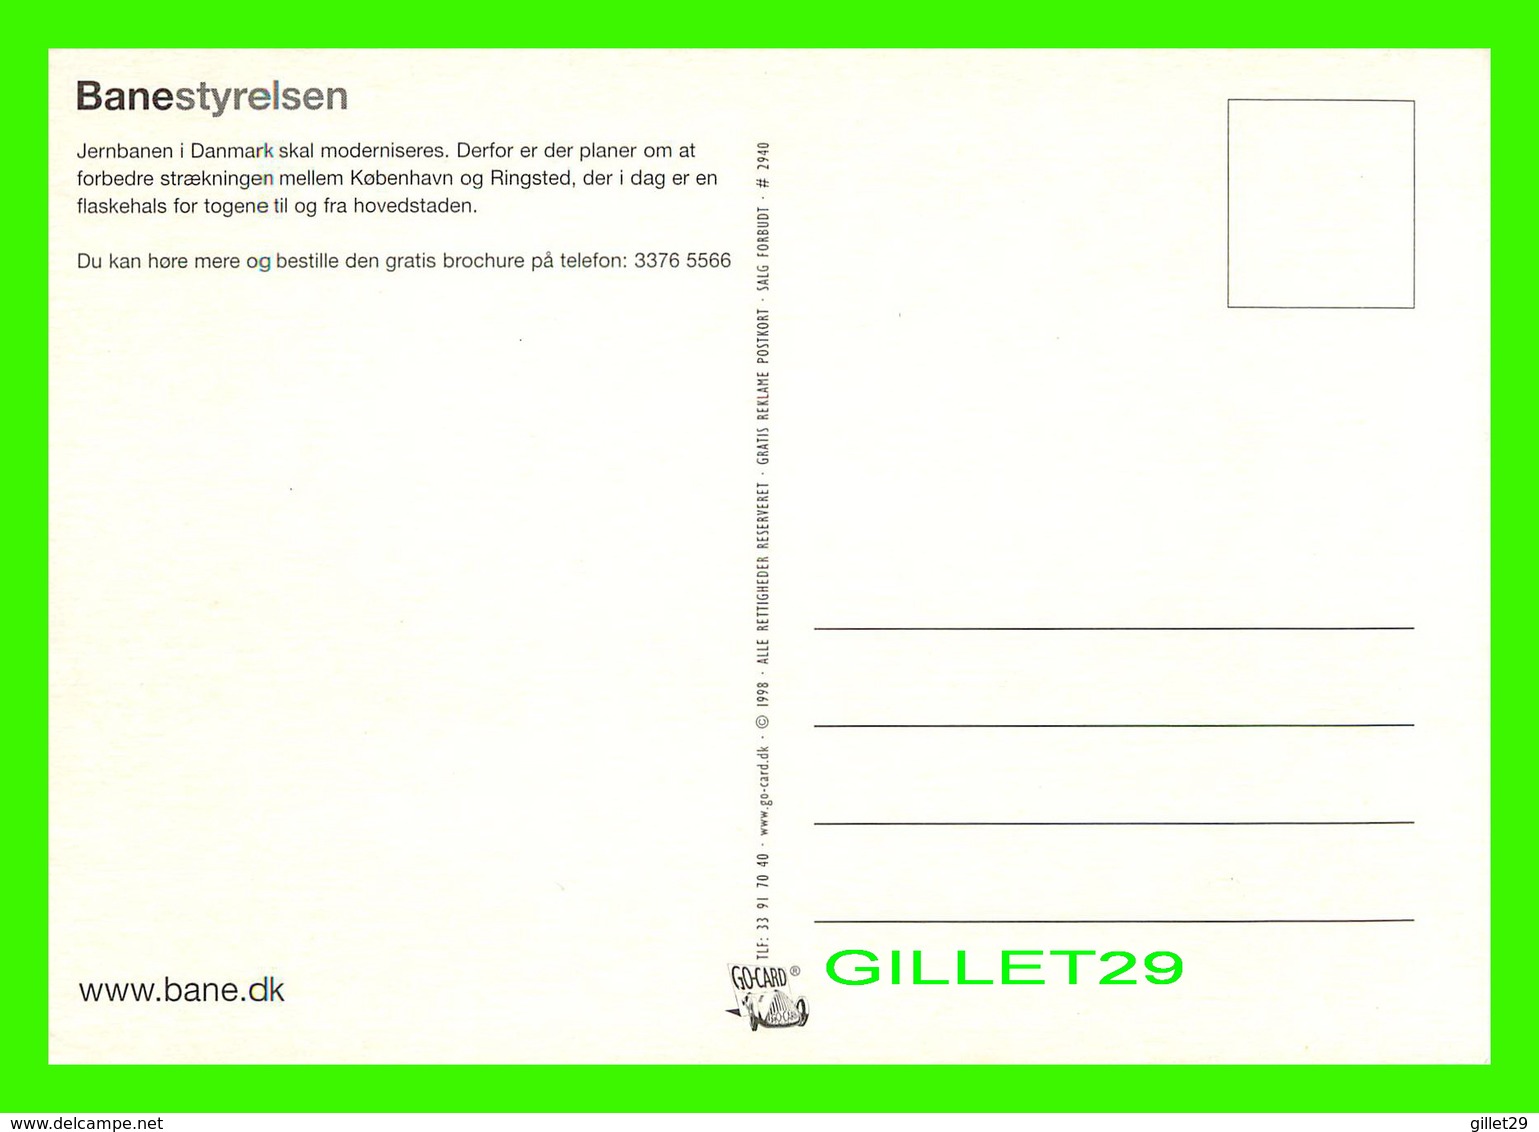 ADVERTISING, PUBLICITÉ - BEDRE BANNER, MEILLEUR BANQUE - BANESTYRELSEN - GO-CARD 1998 No 2940 - - Werbepostkarten